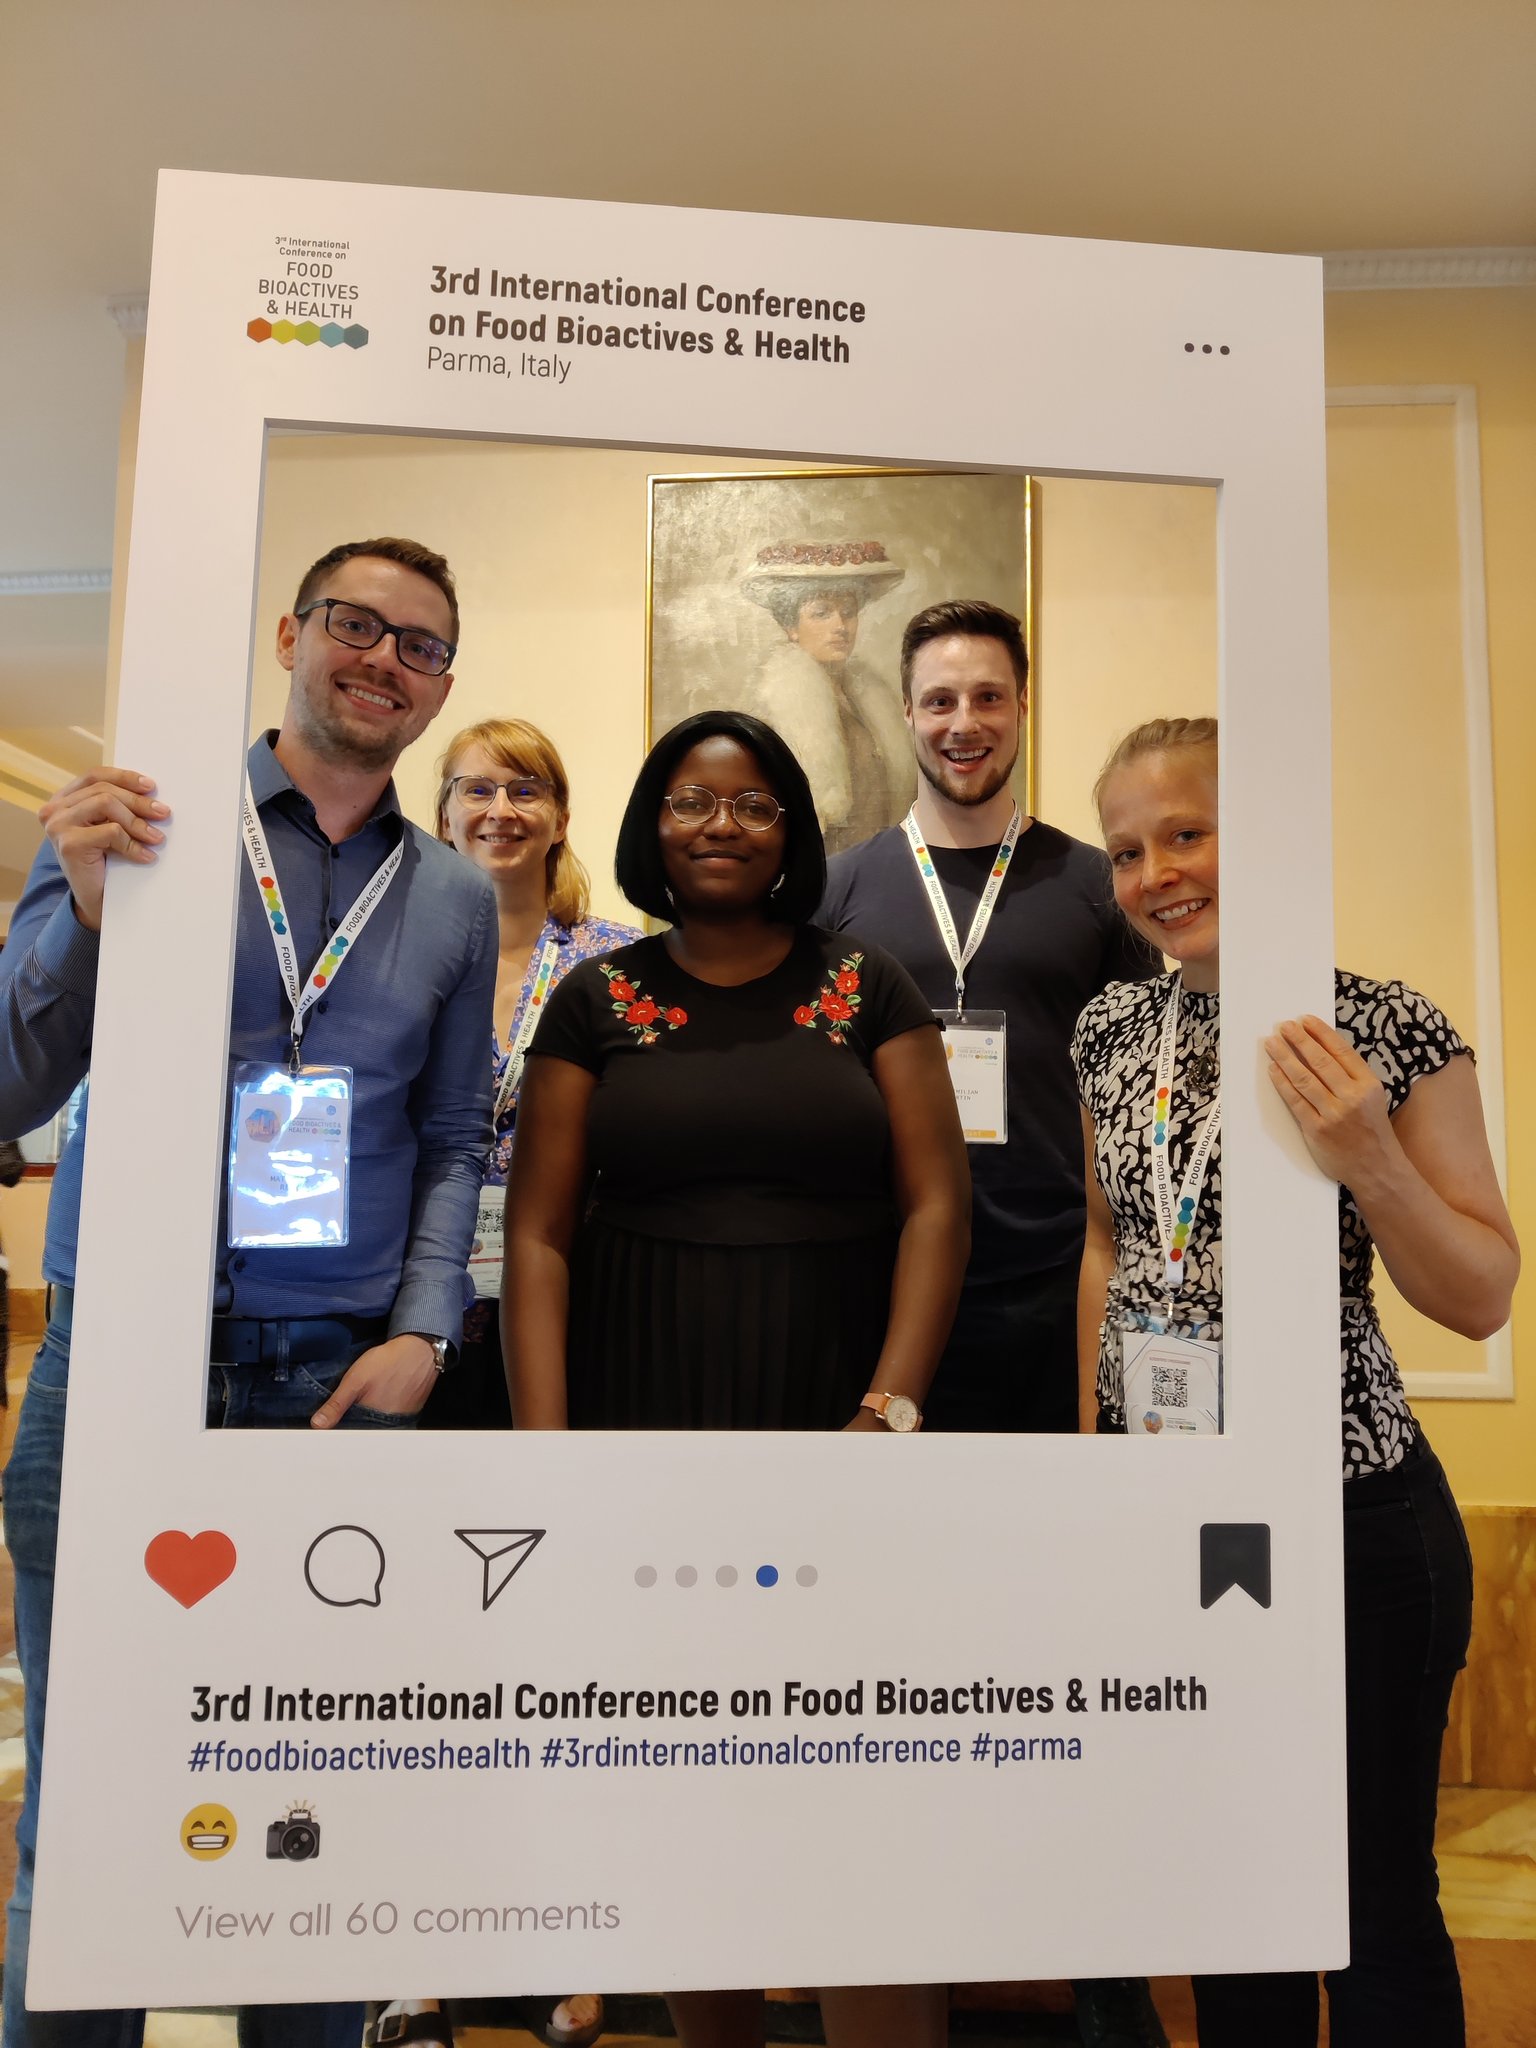 IGZ participants at the 3rd International Conference on Food Bioactives & Health. flnr: Matthias Renz, Maria Fitzner, Kudzai Mbudu, Maximillian Martin and Franziska Hanschen